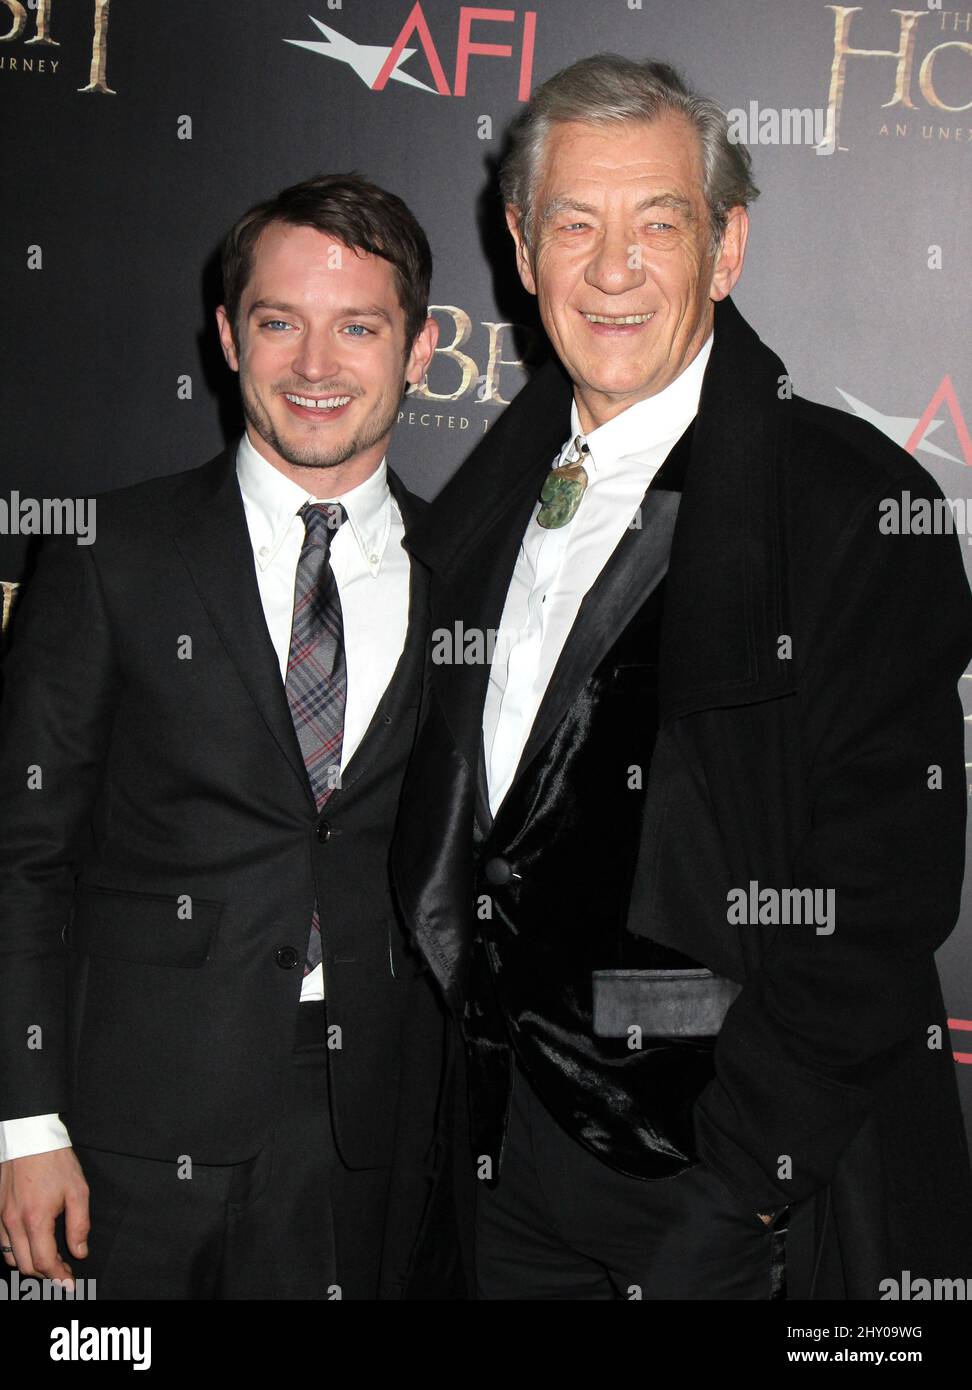 Elijah Wood and Ian McKellen attending 'The Hobbit: An Unexpected Journey' premiere held at The Ziegfeld Theatre in New York, USA. Stock Photo